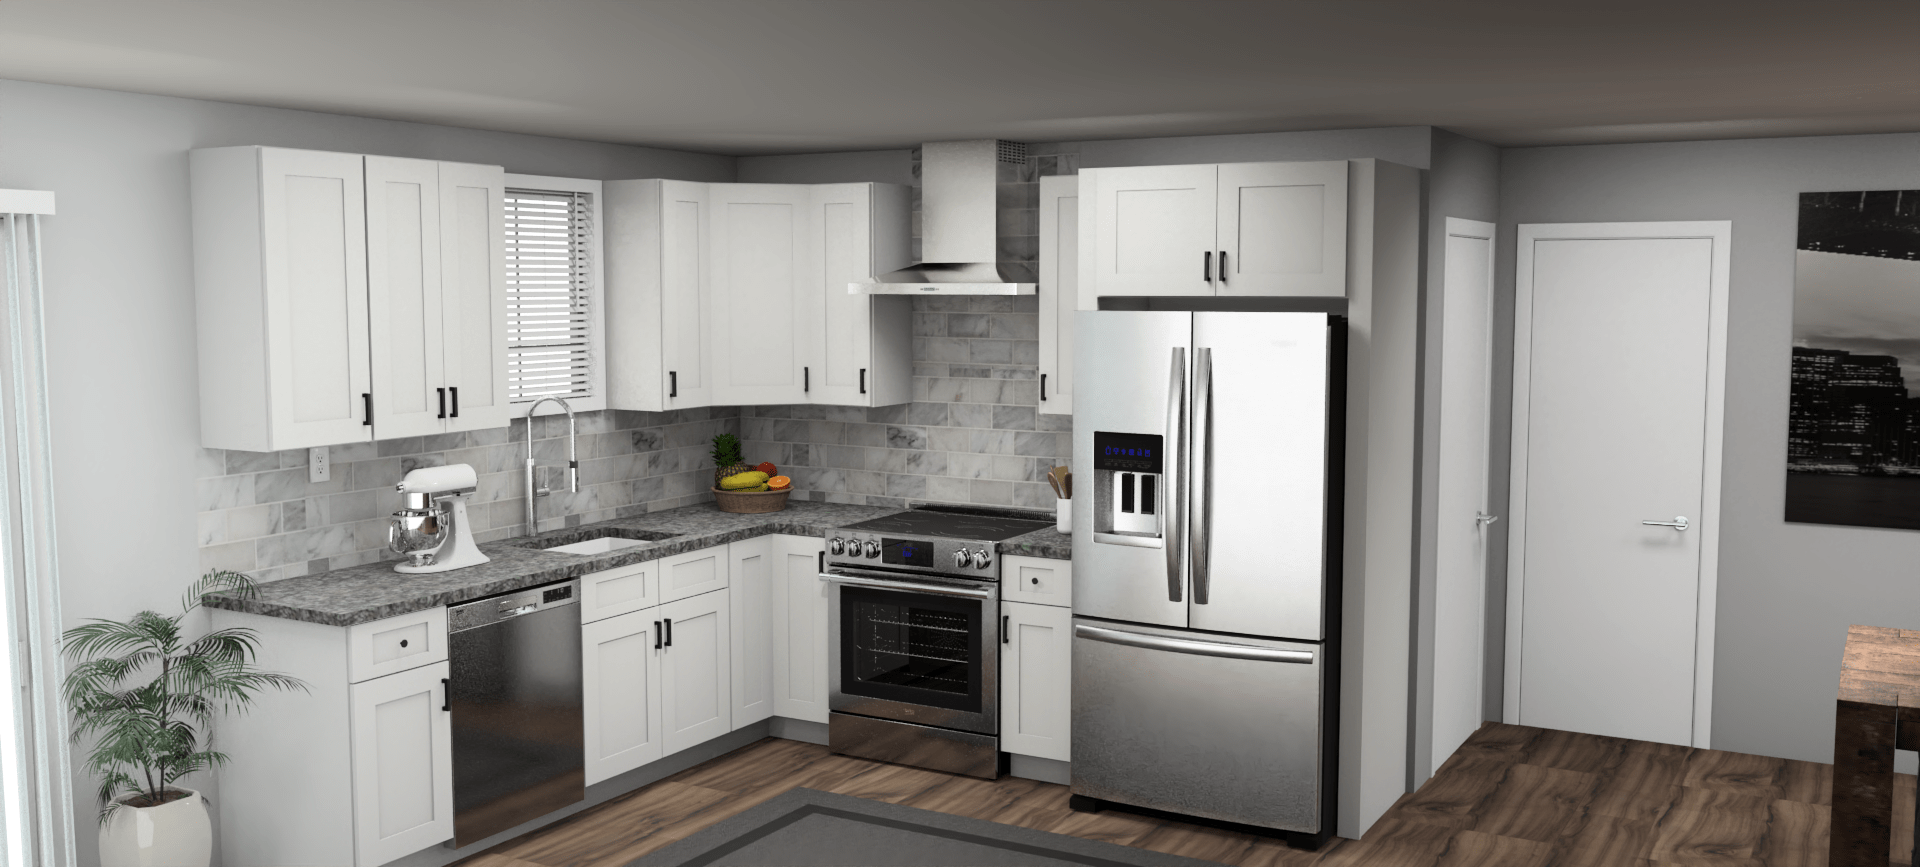 Fabuwood Allure Galaxy Frost 9 x 10 L Shaped Kitchen Main Layout Photo